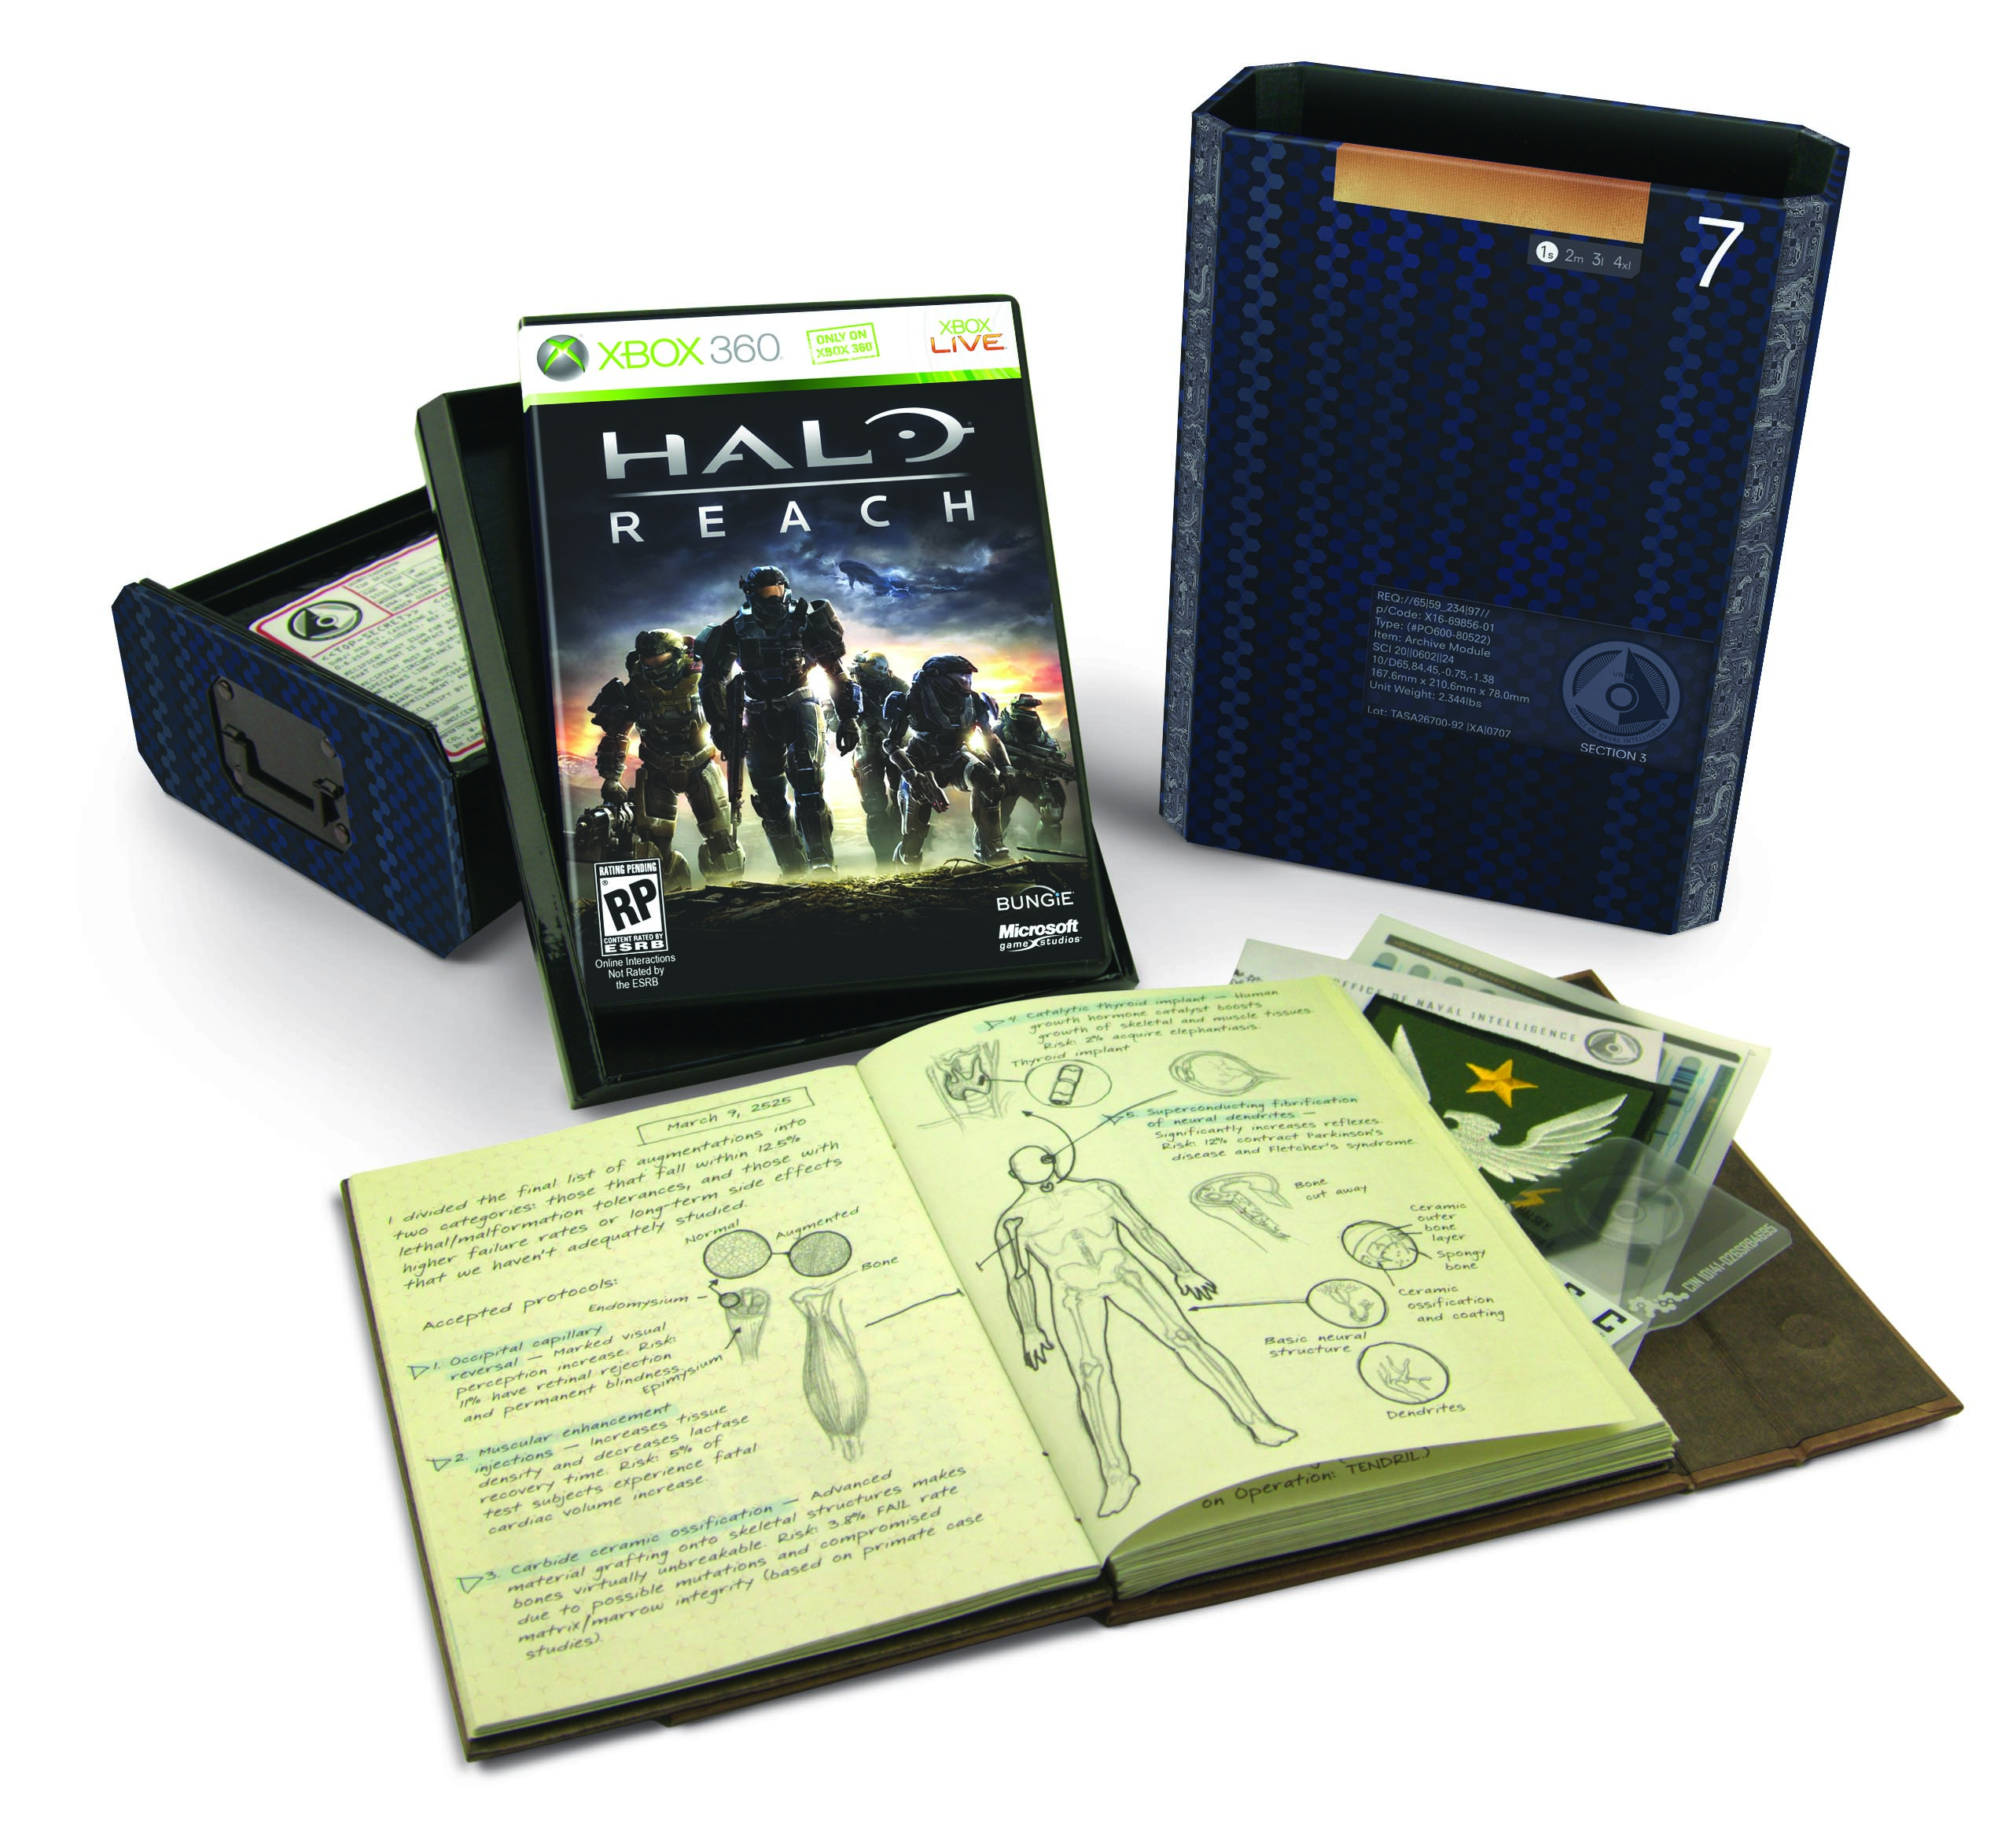 halo reach limited edition xbox 360